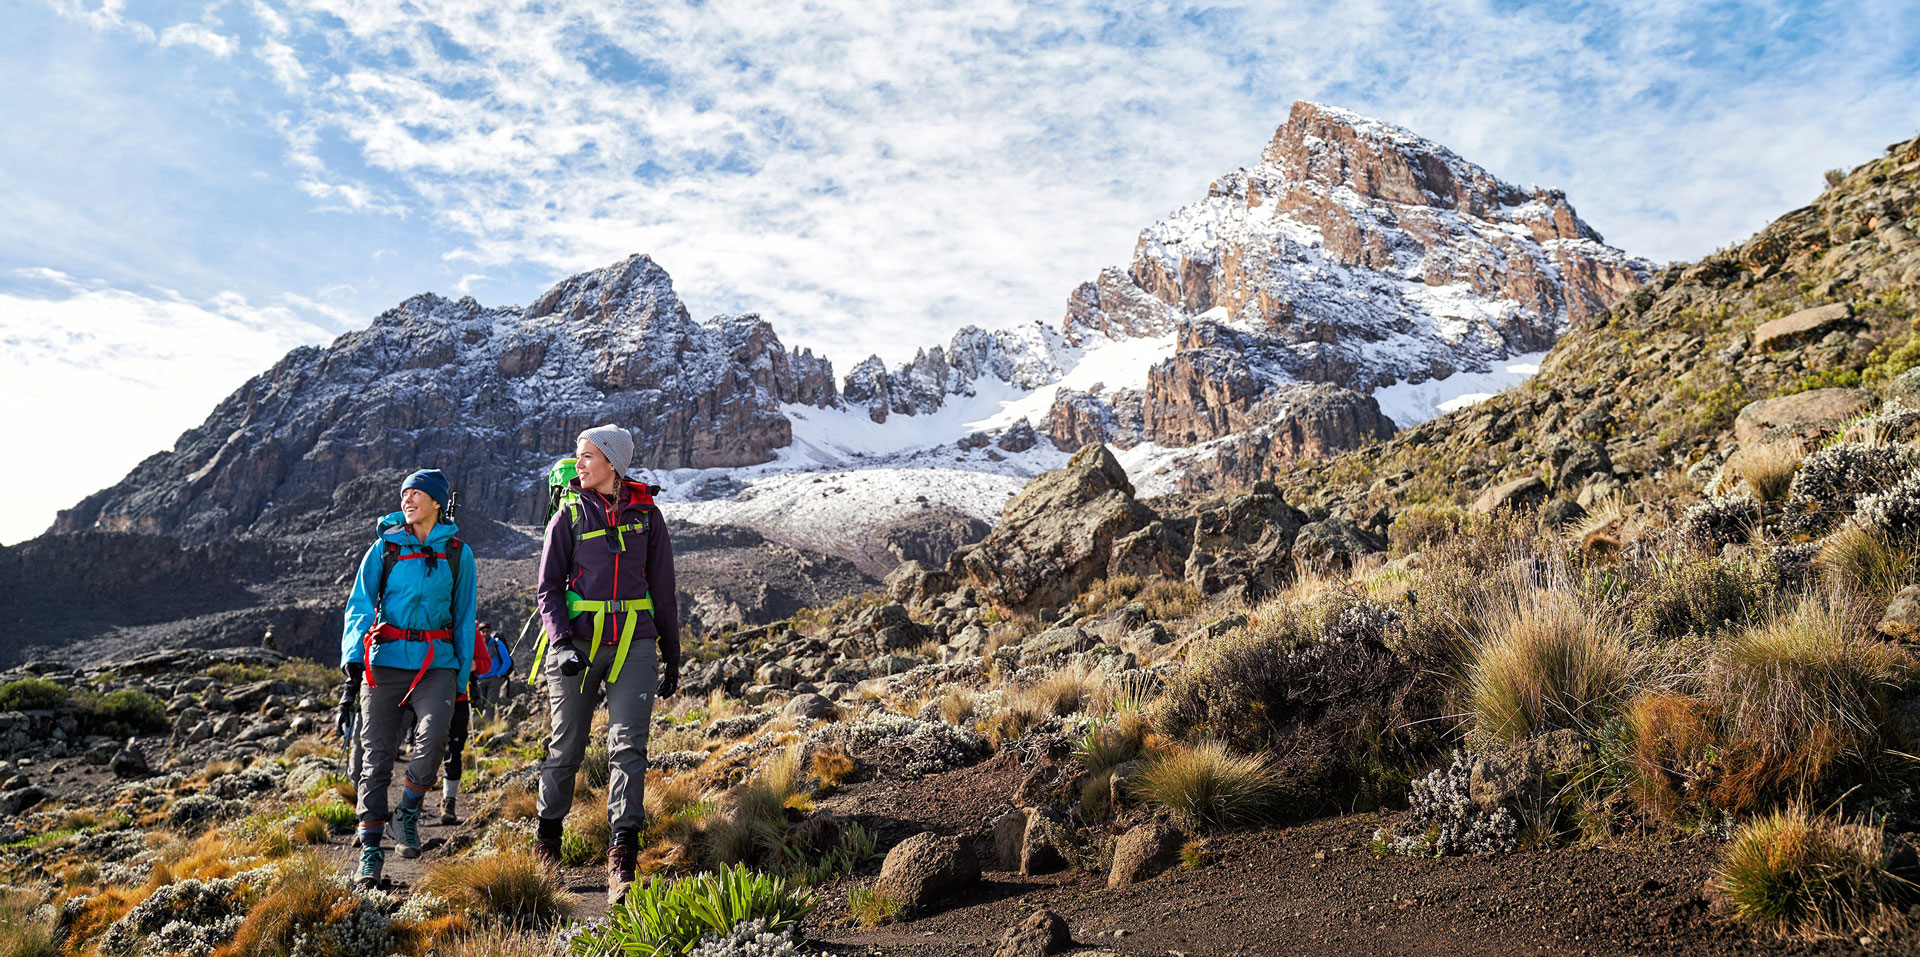 Mount Kenya & Mount Kilimanjaro, 2 Weeks – 2 peaks